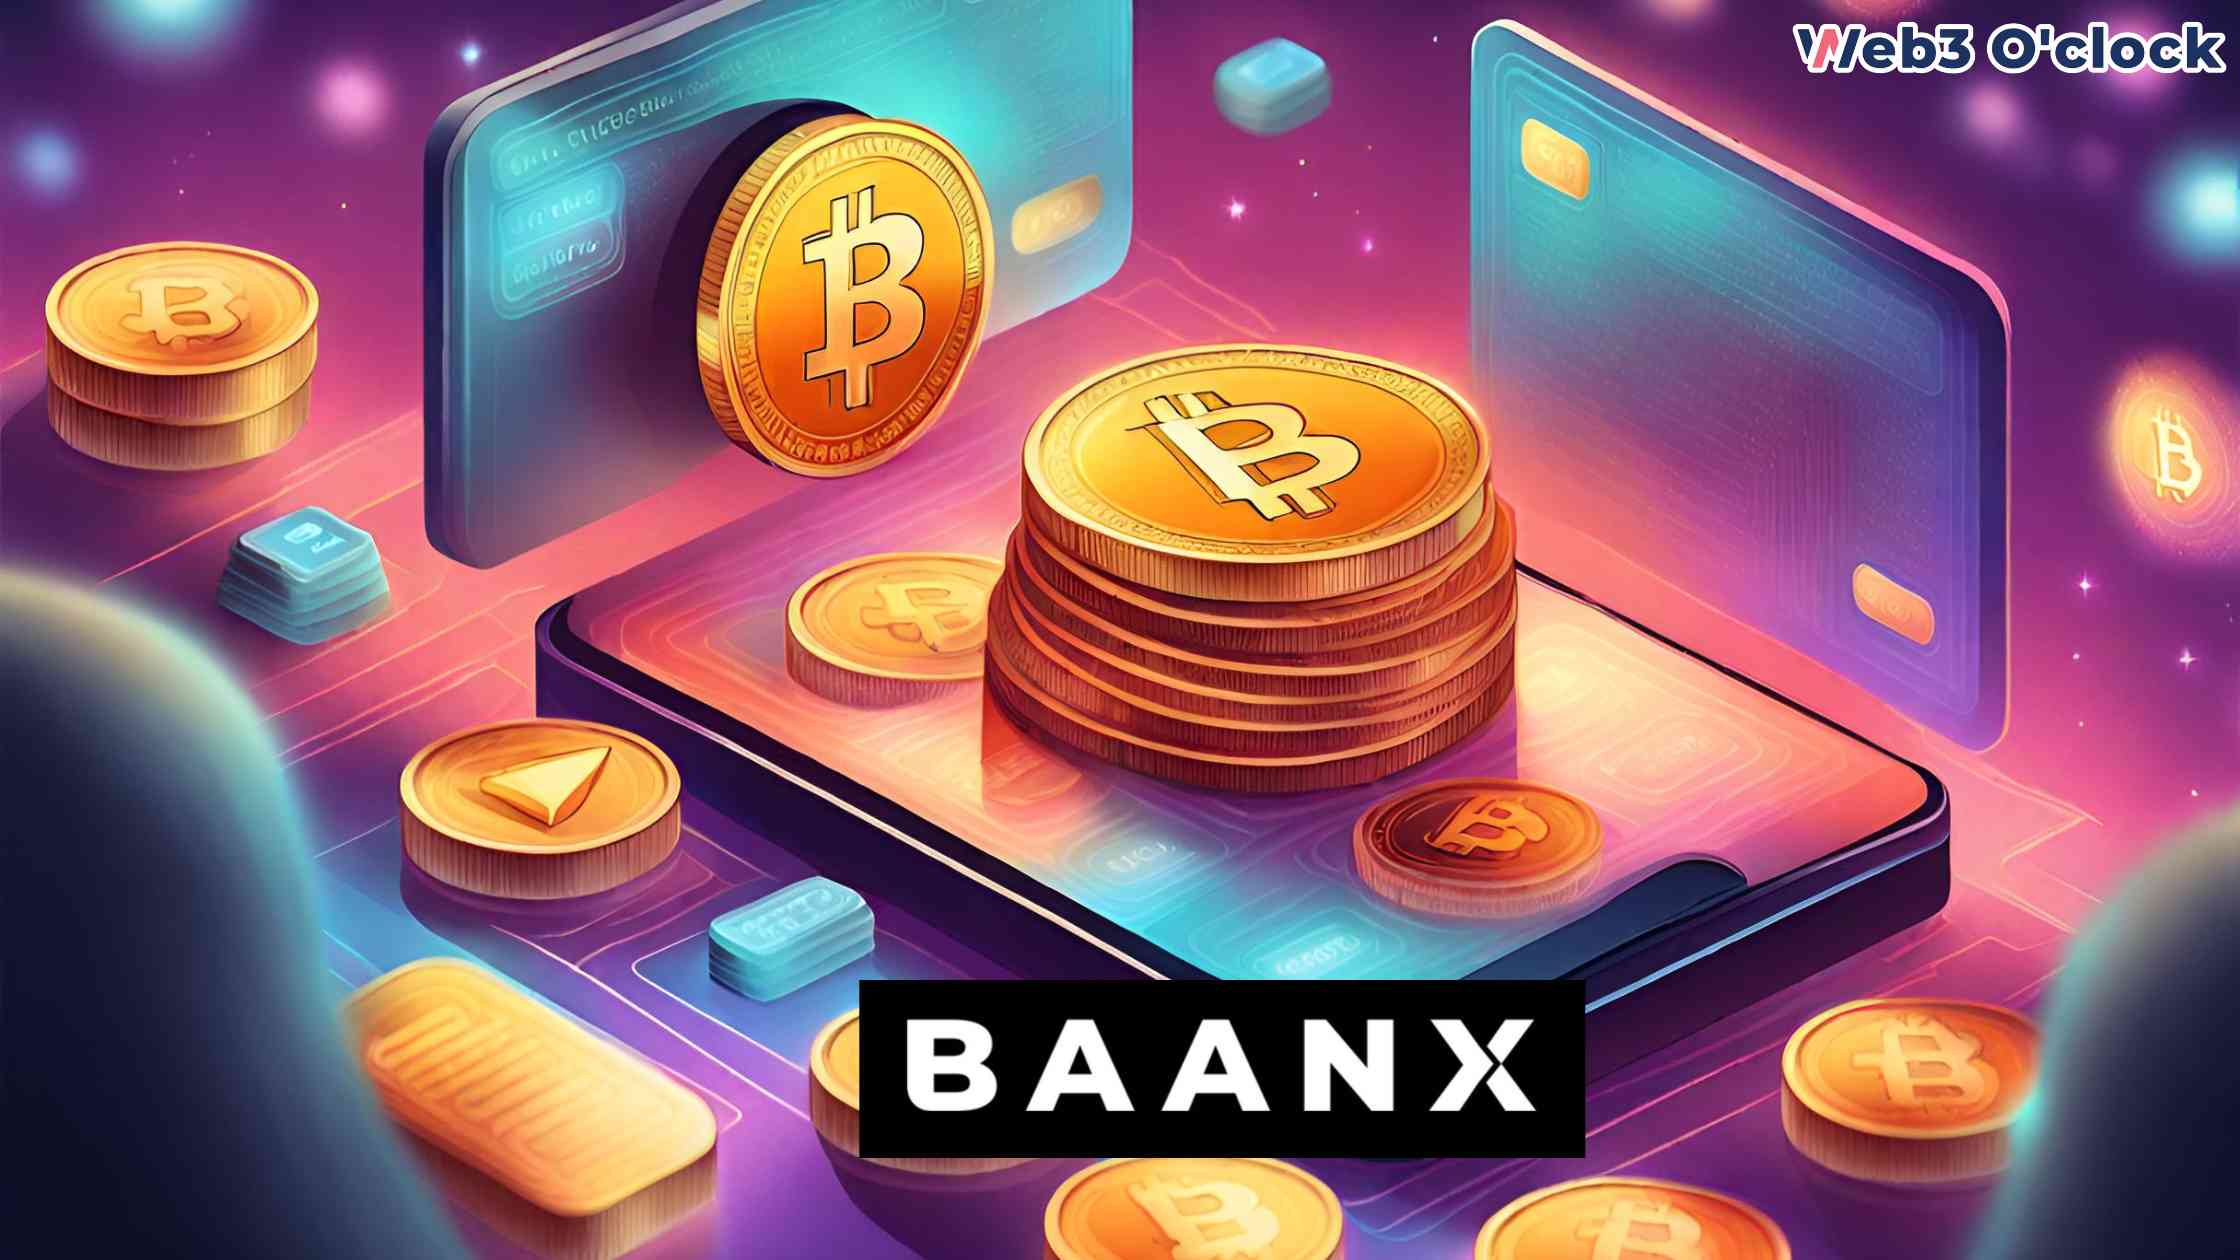 Baanx Raises Funding Round By Web3 O'clock